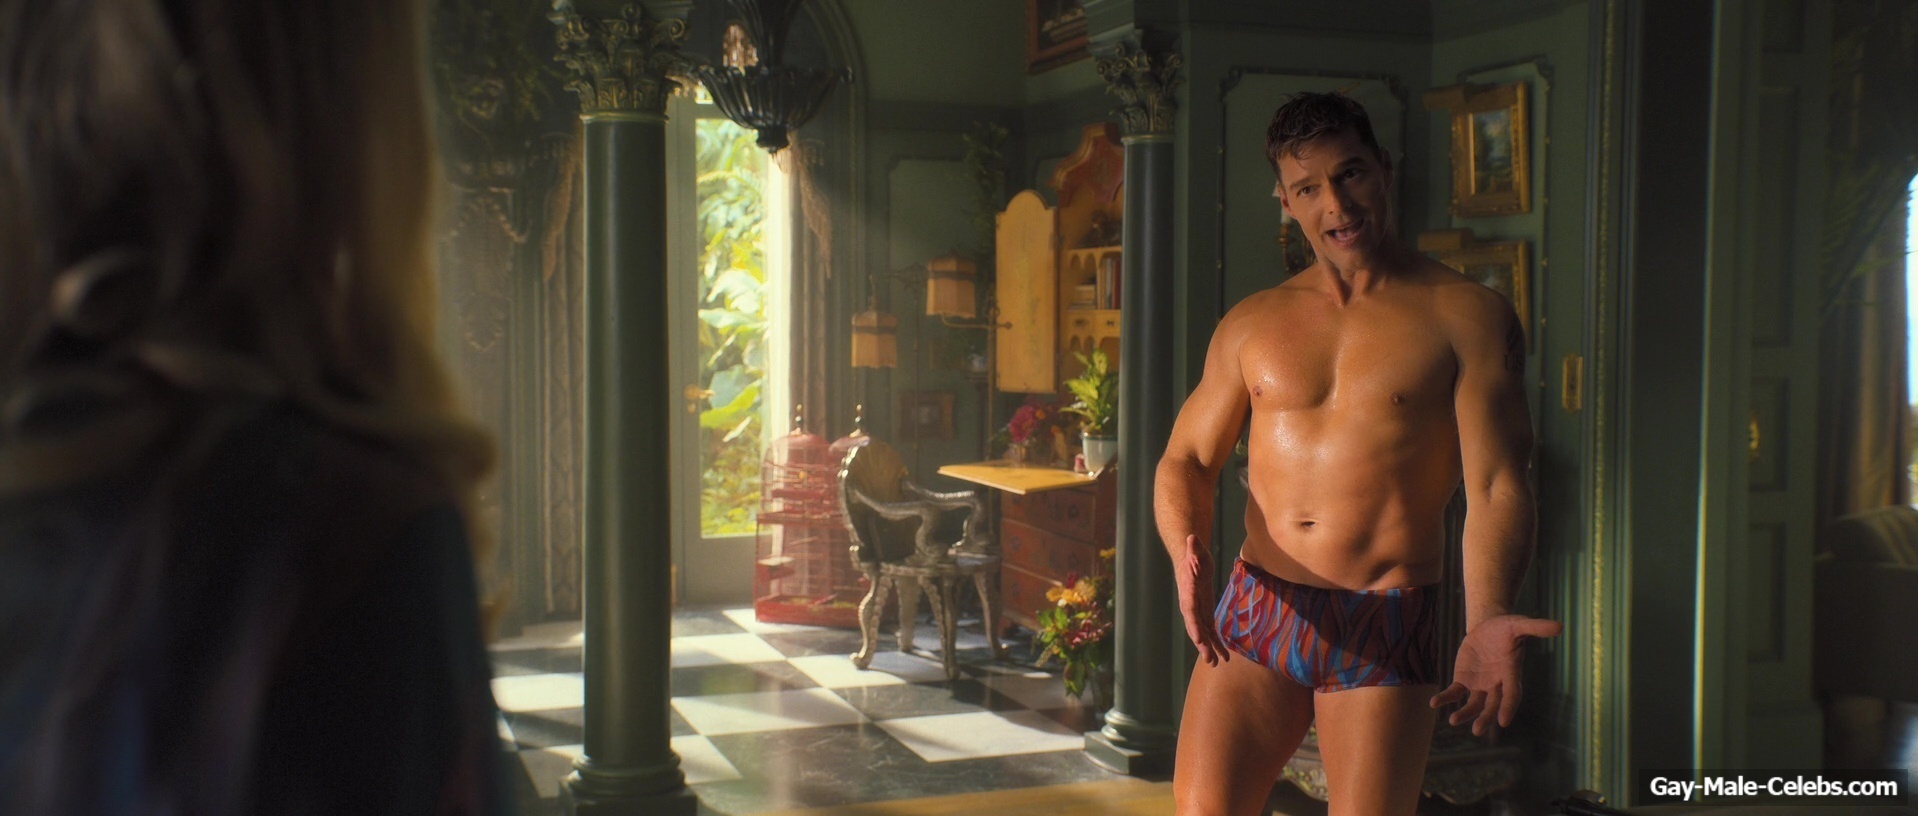 Ricky Martin nude torso